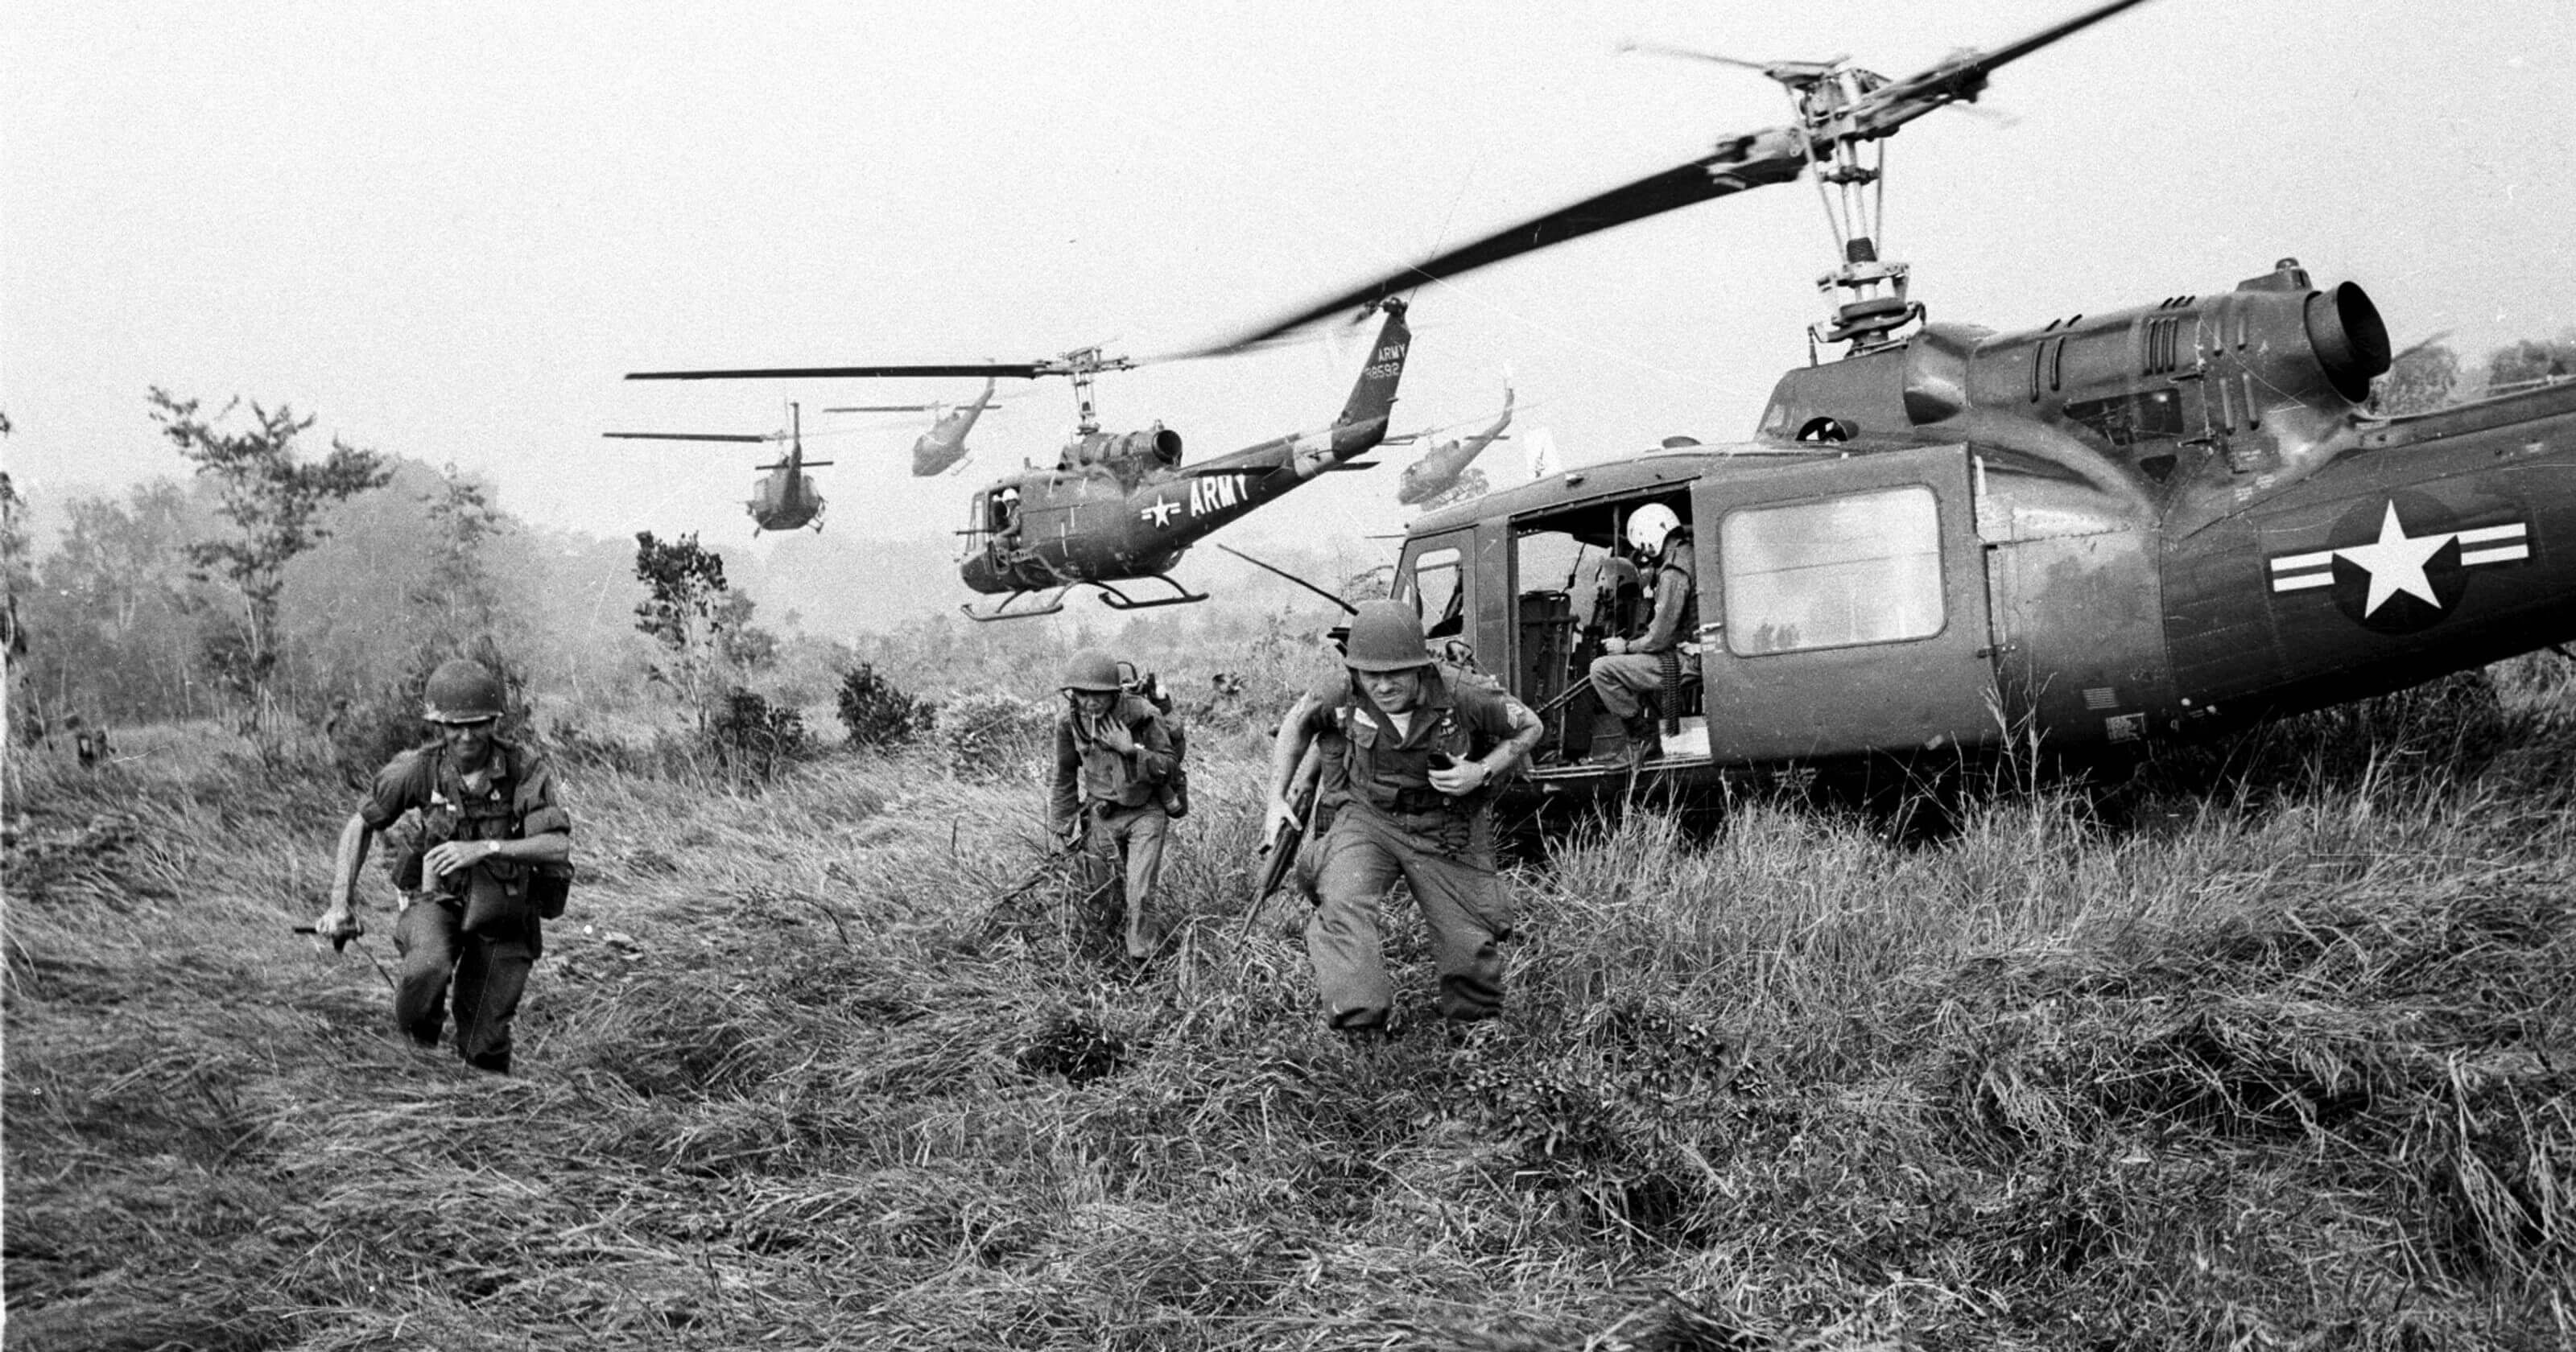 How many Vietnamese people died in the Vietnam war